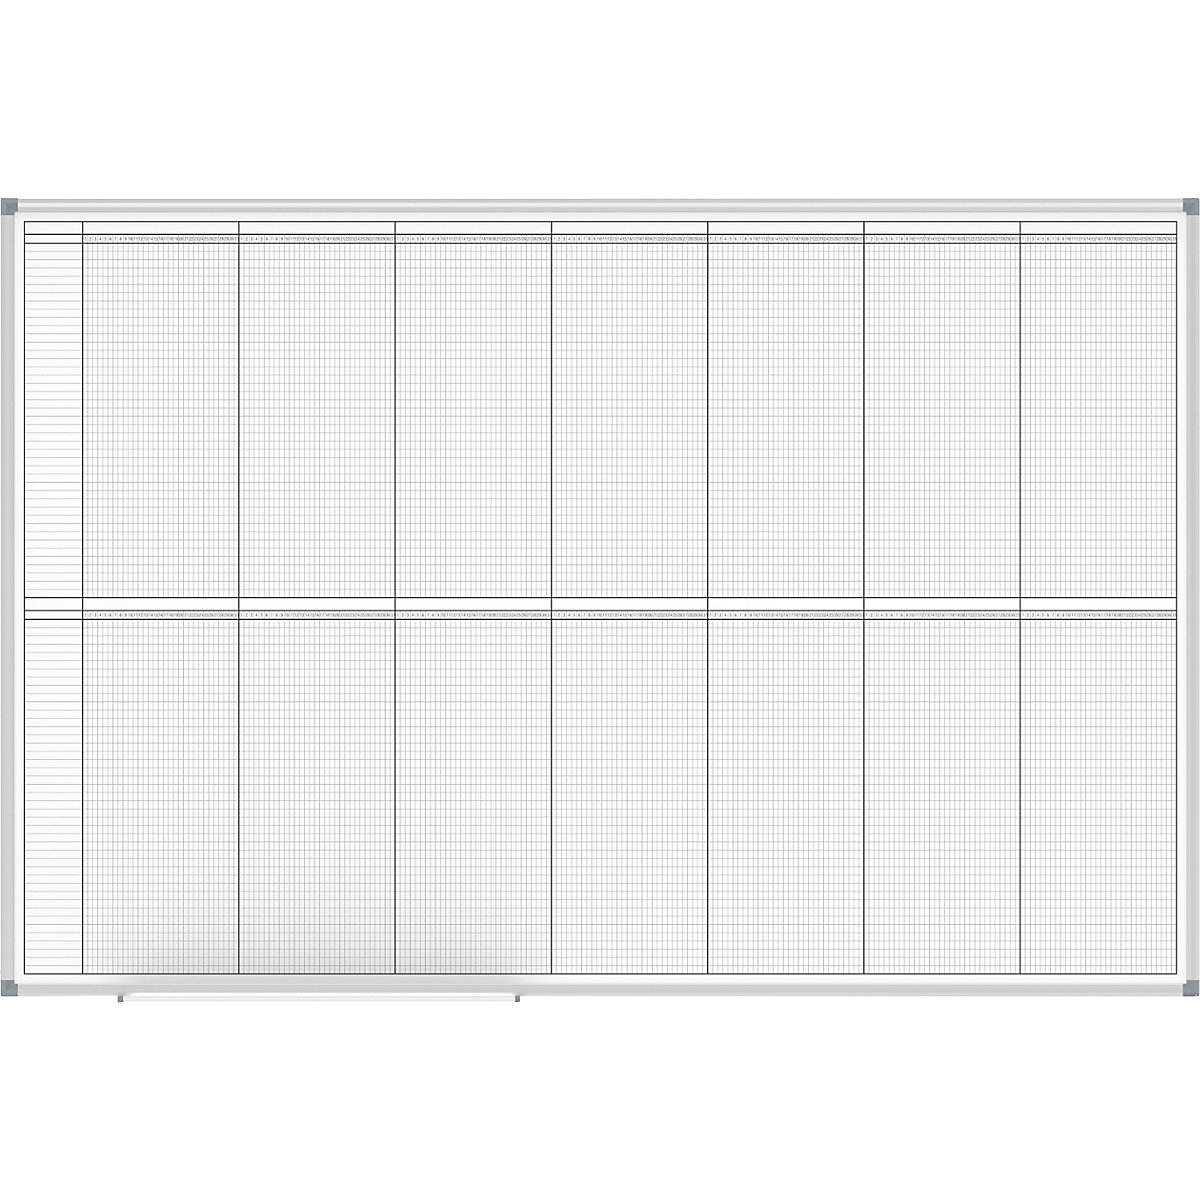 Tableau planning – MAUL, planning annuel, 2 x 6 mois, largeur 1500 mm-3